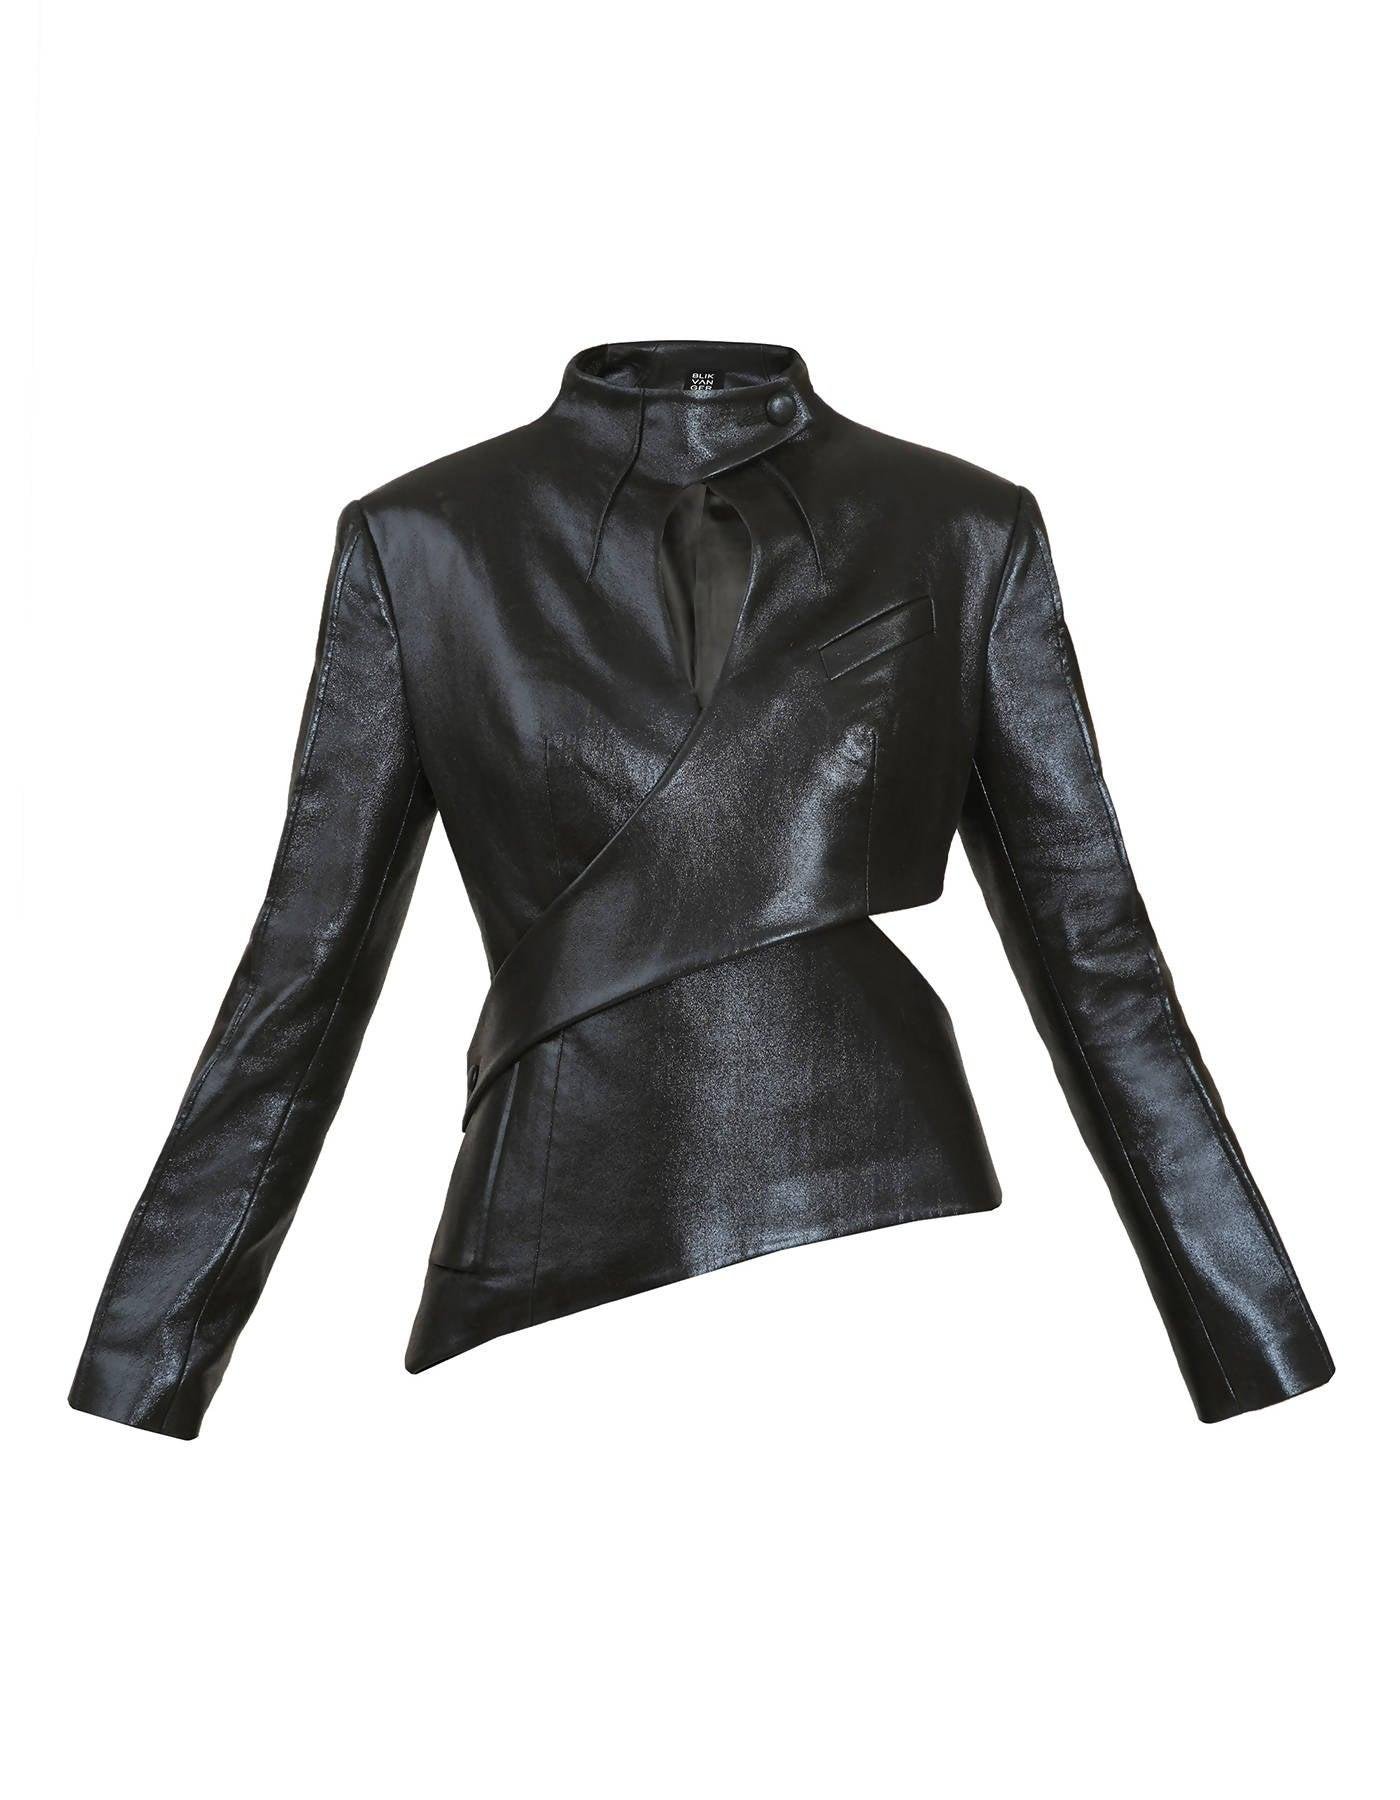 Shiny Black Cutout Suit Jacket by BLIKVANGER